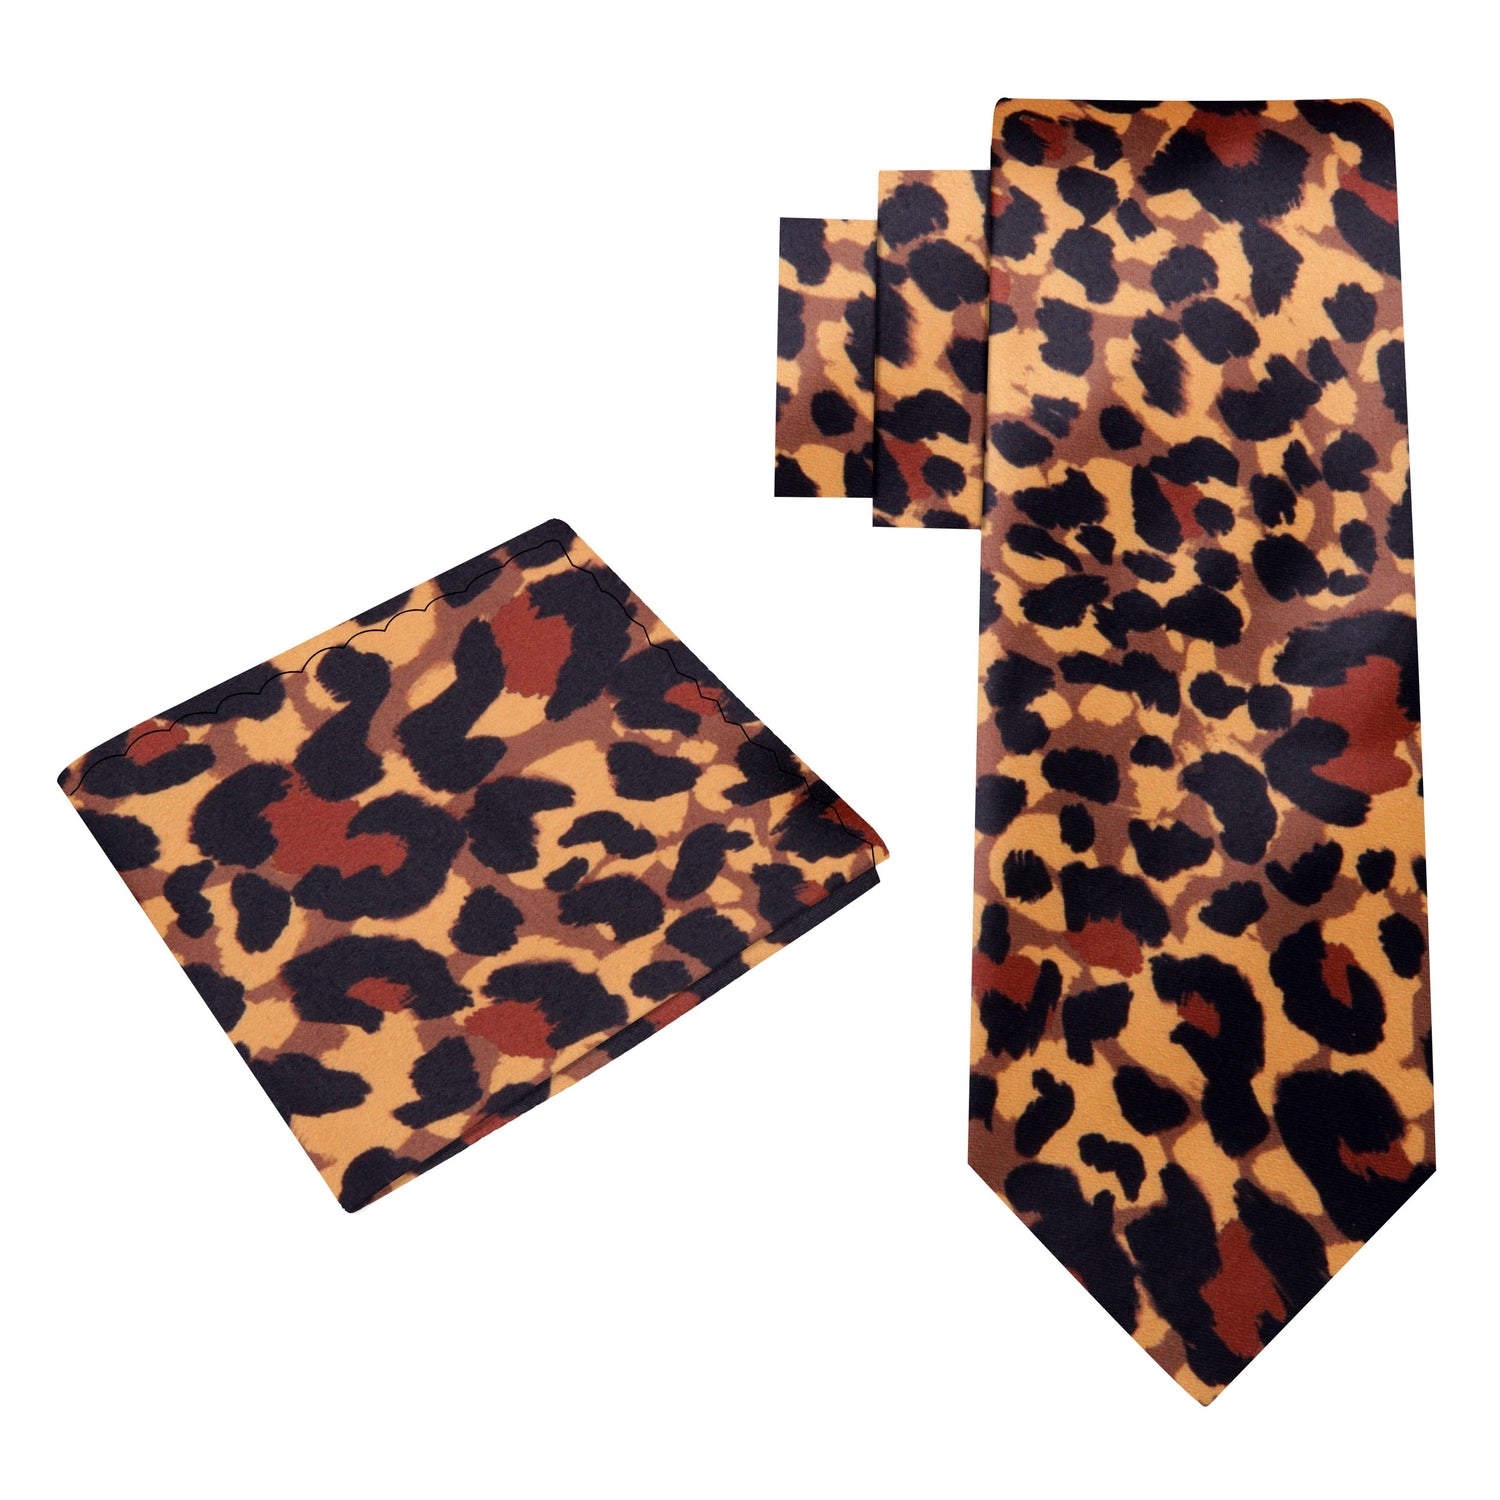 Alt View: Orange, Black Cheetah Print Tie and Square